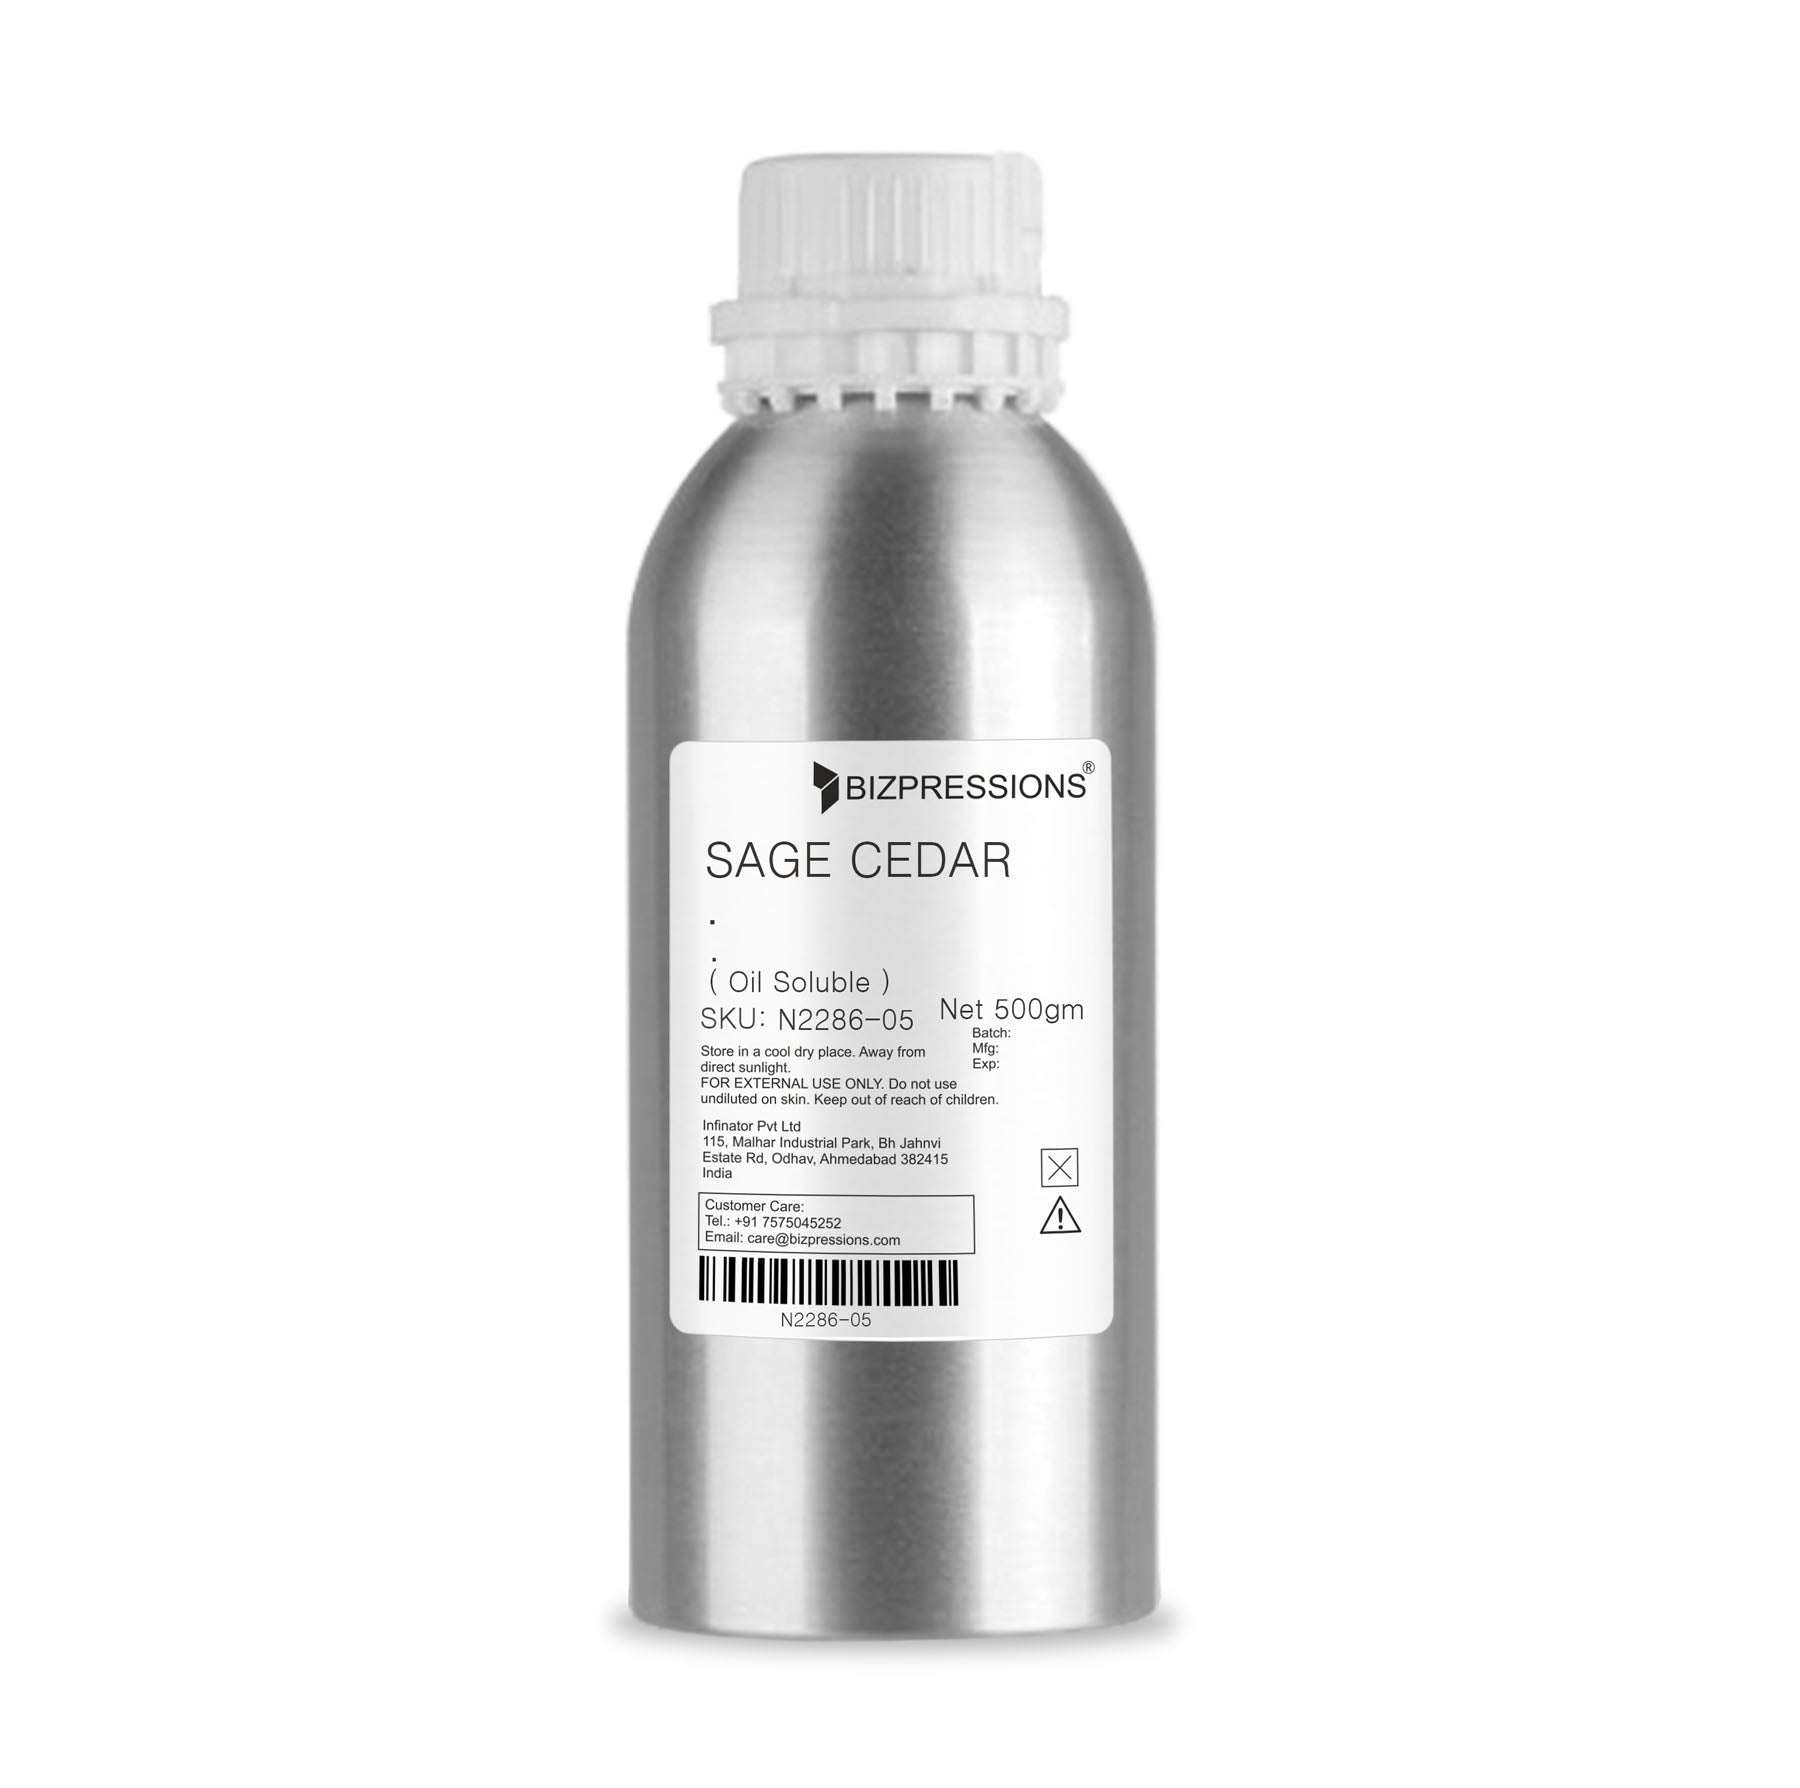 SAGE CEDAR - Fragrance ( Oil Soluble ) - 500 gm